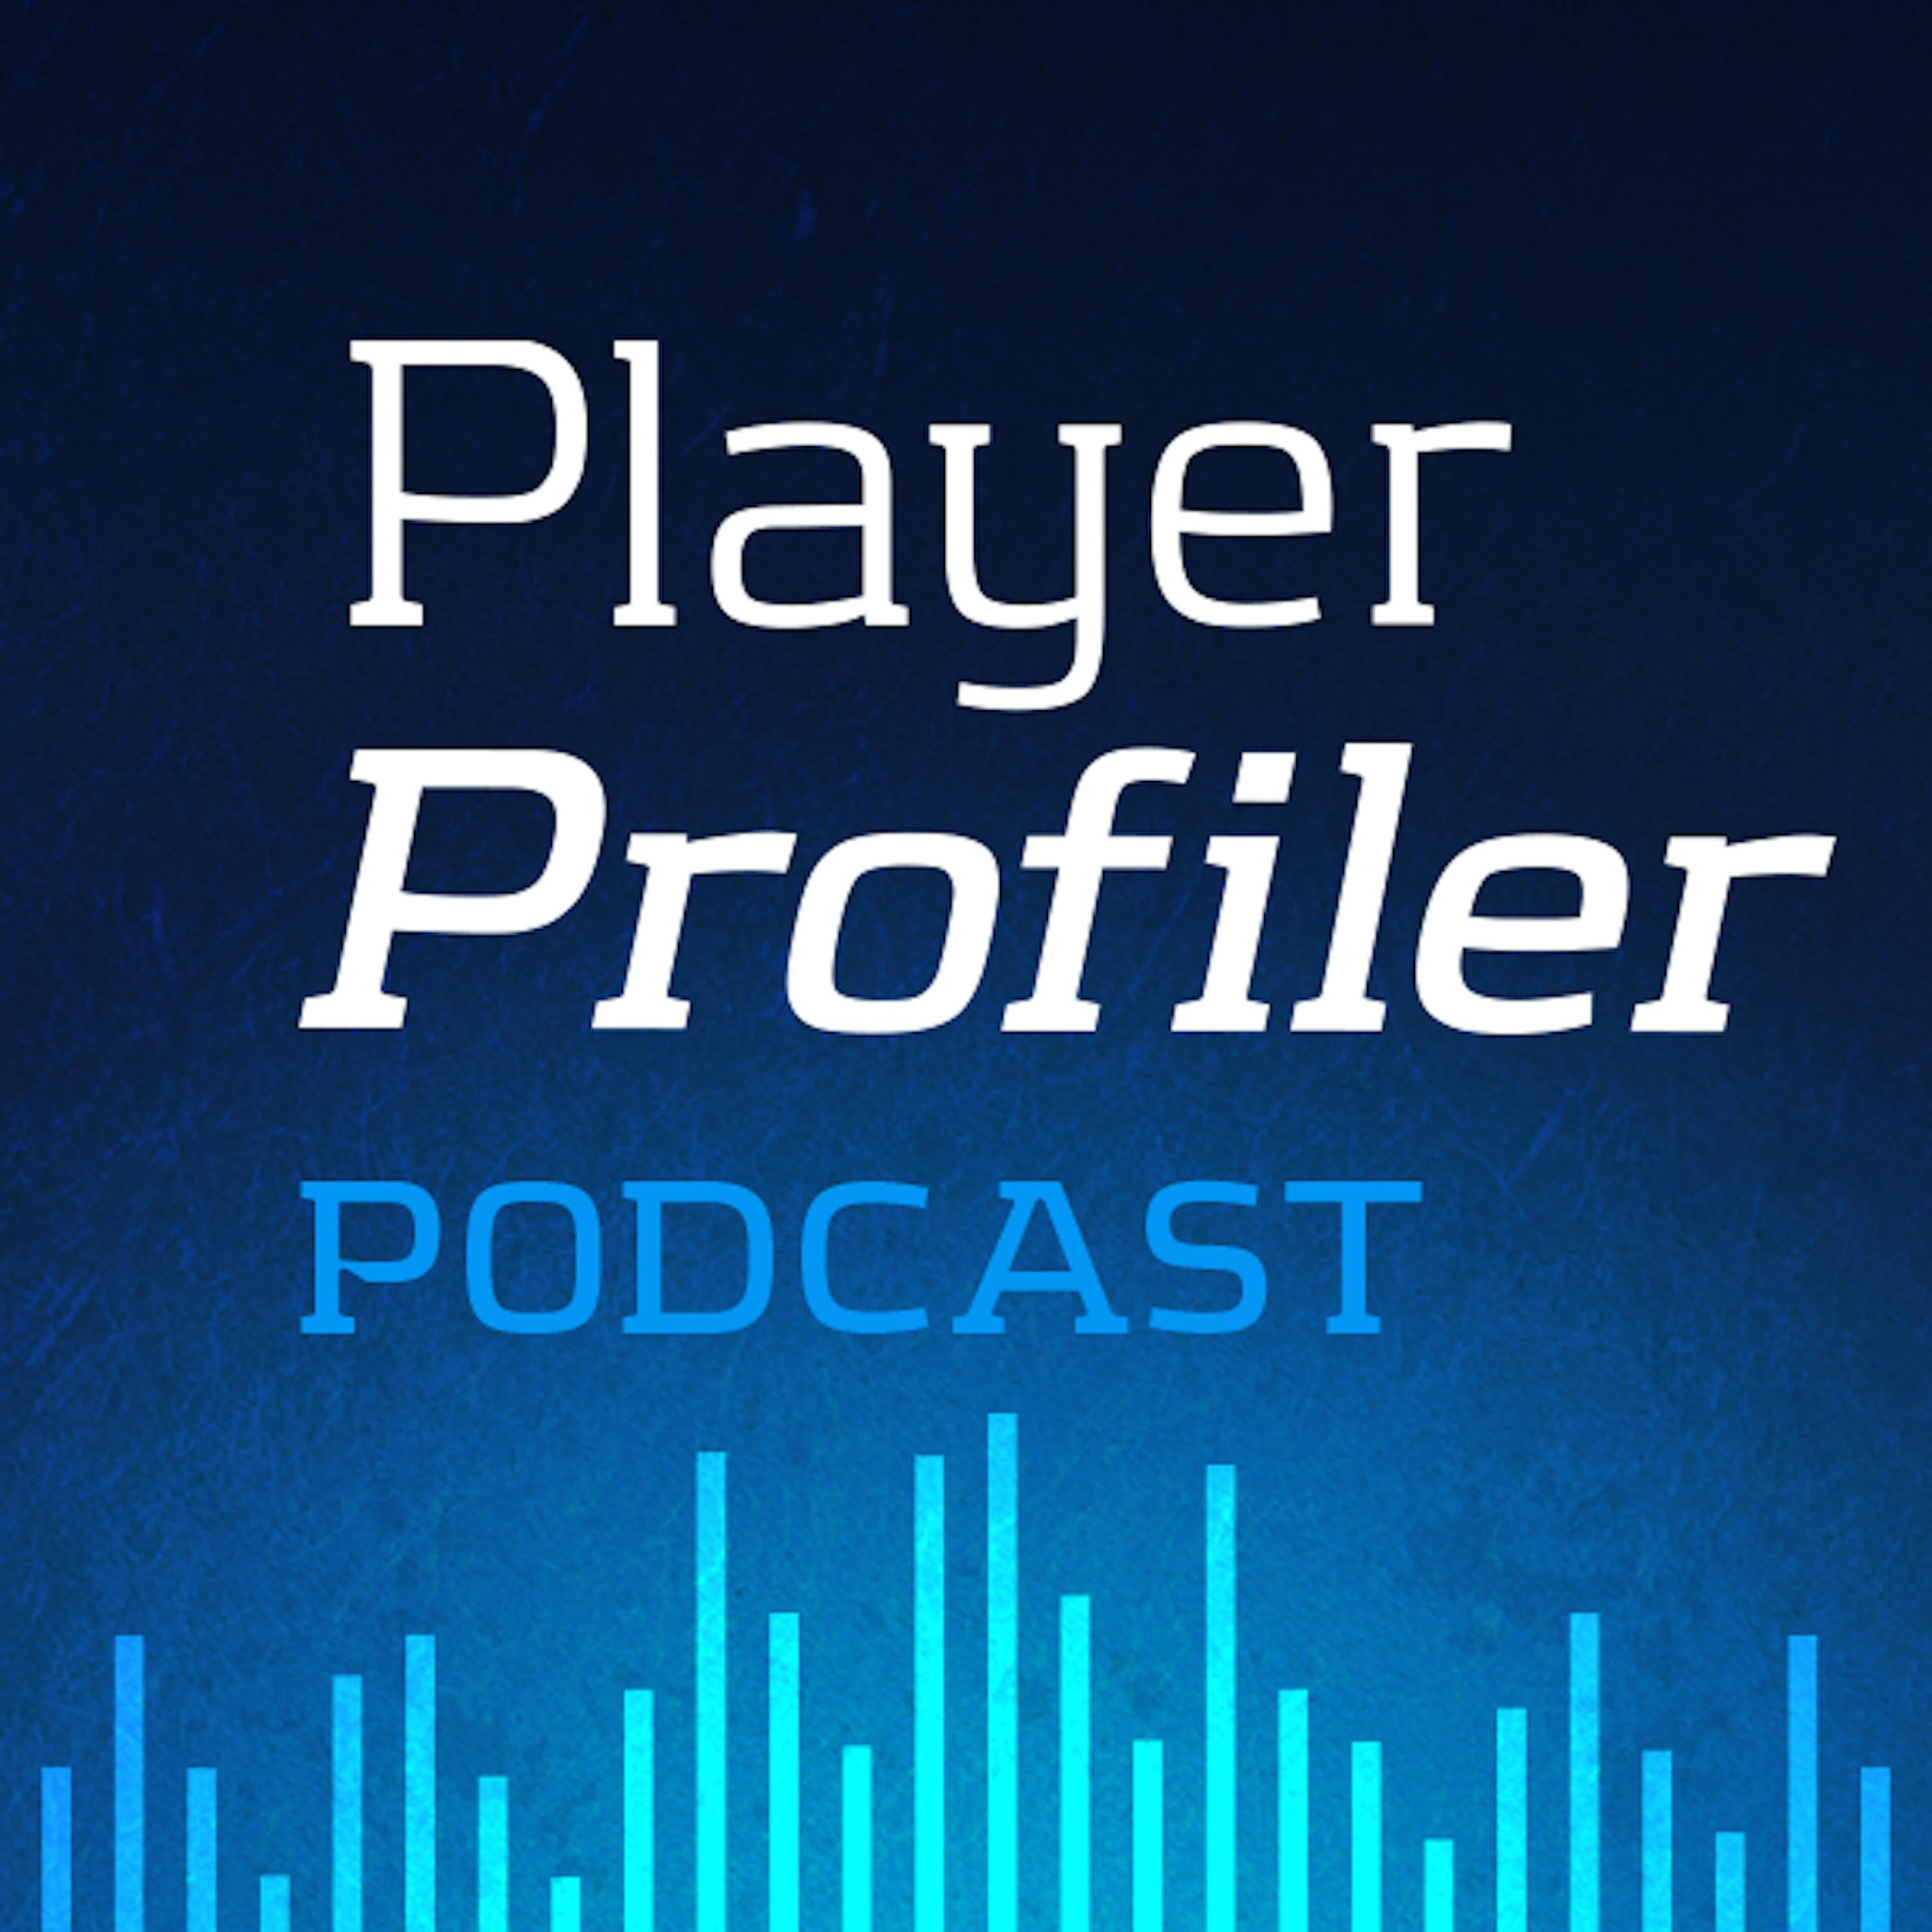 PlayerProfiler Fantasy Football Podcast Network podcast show image